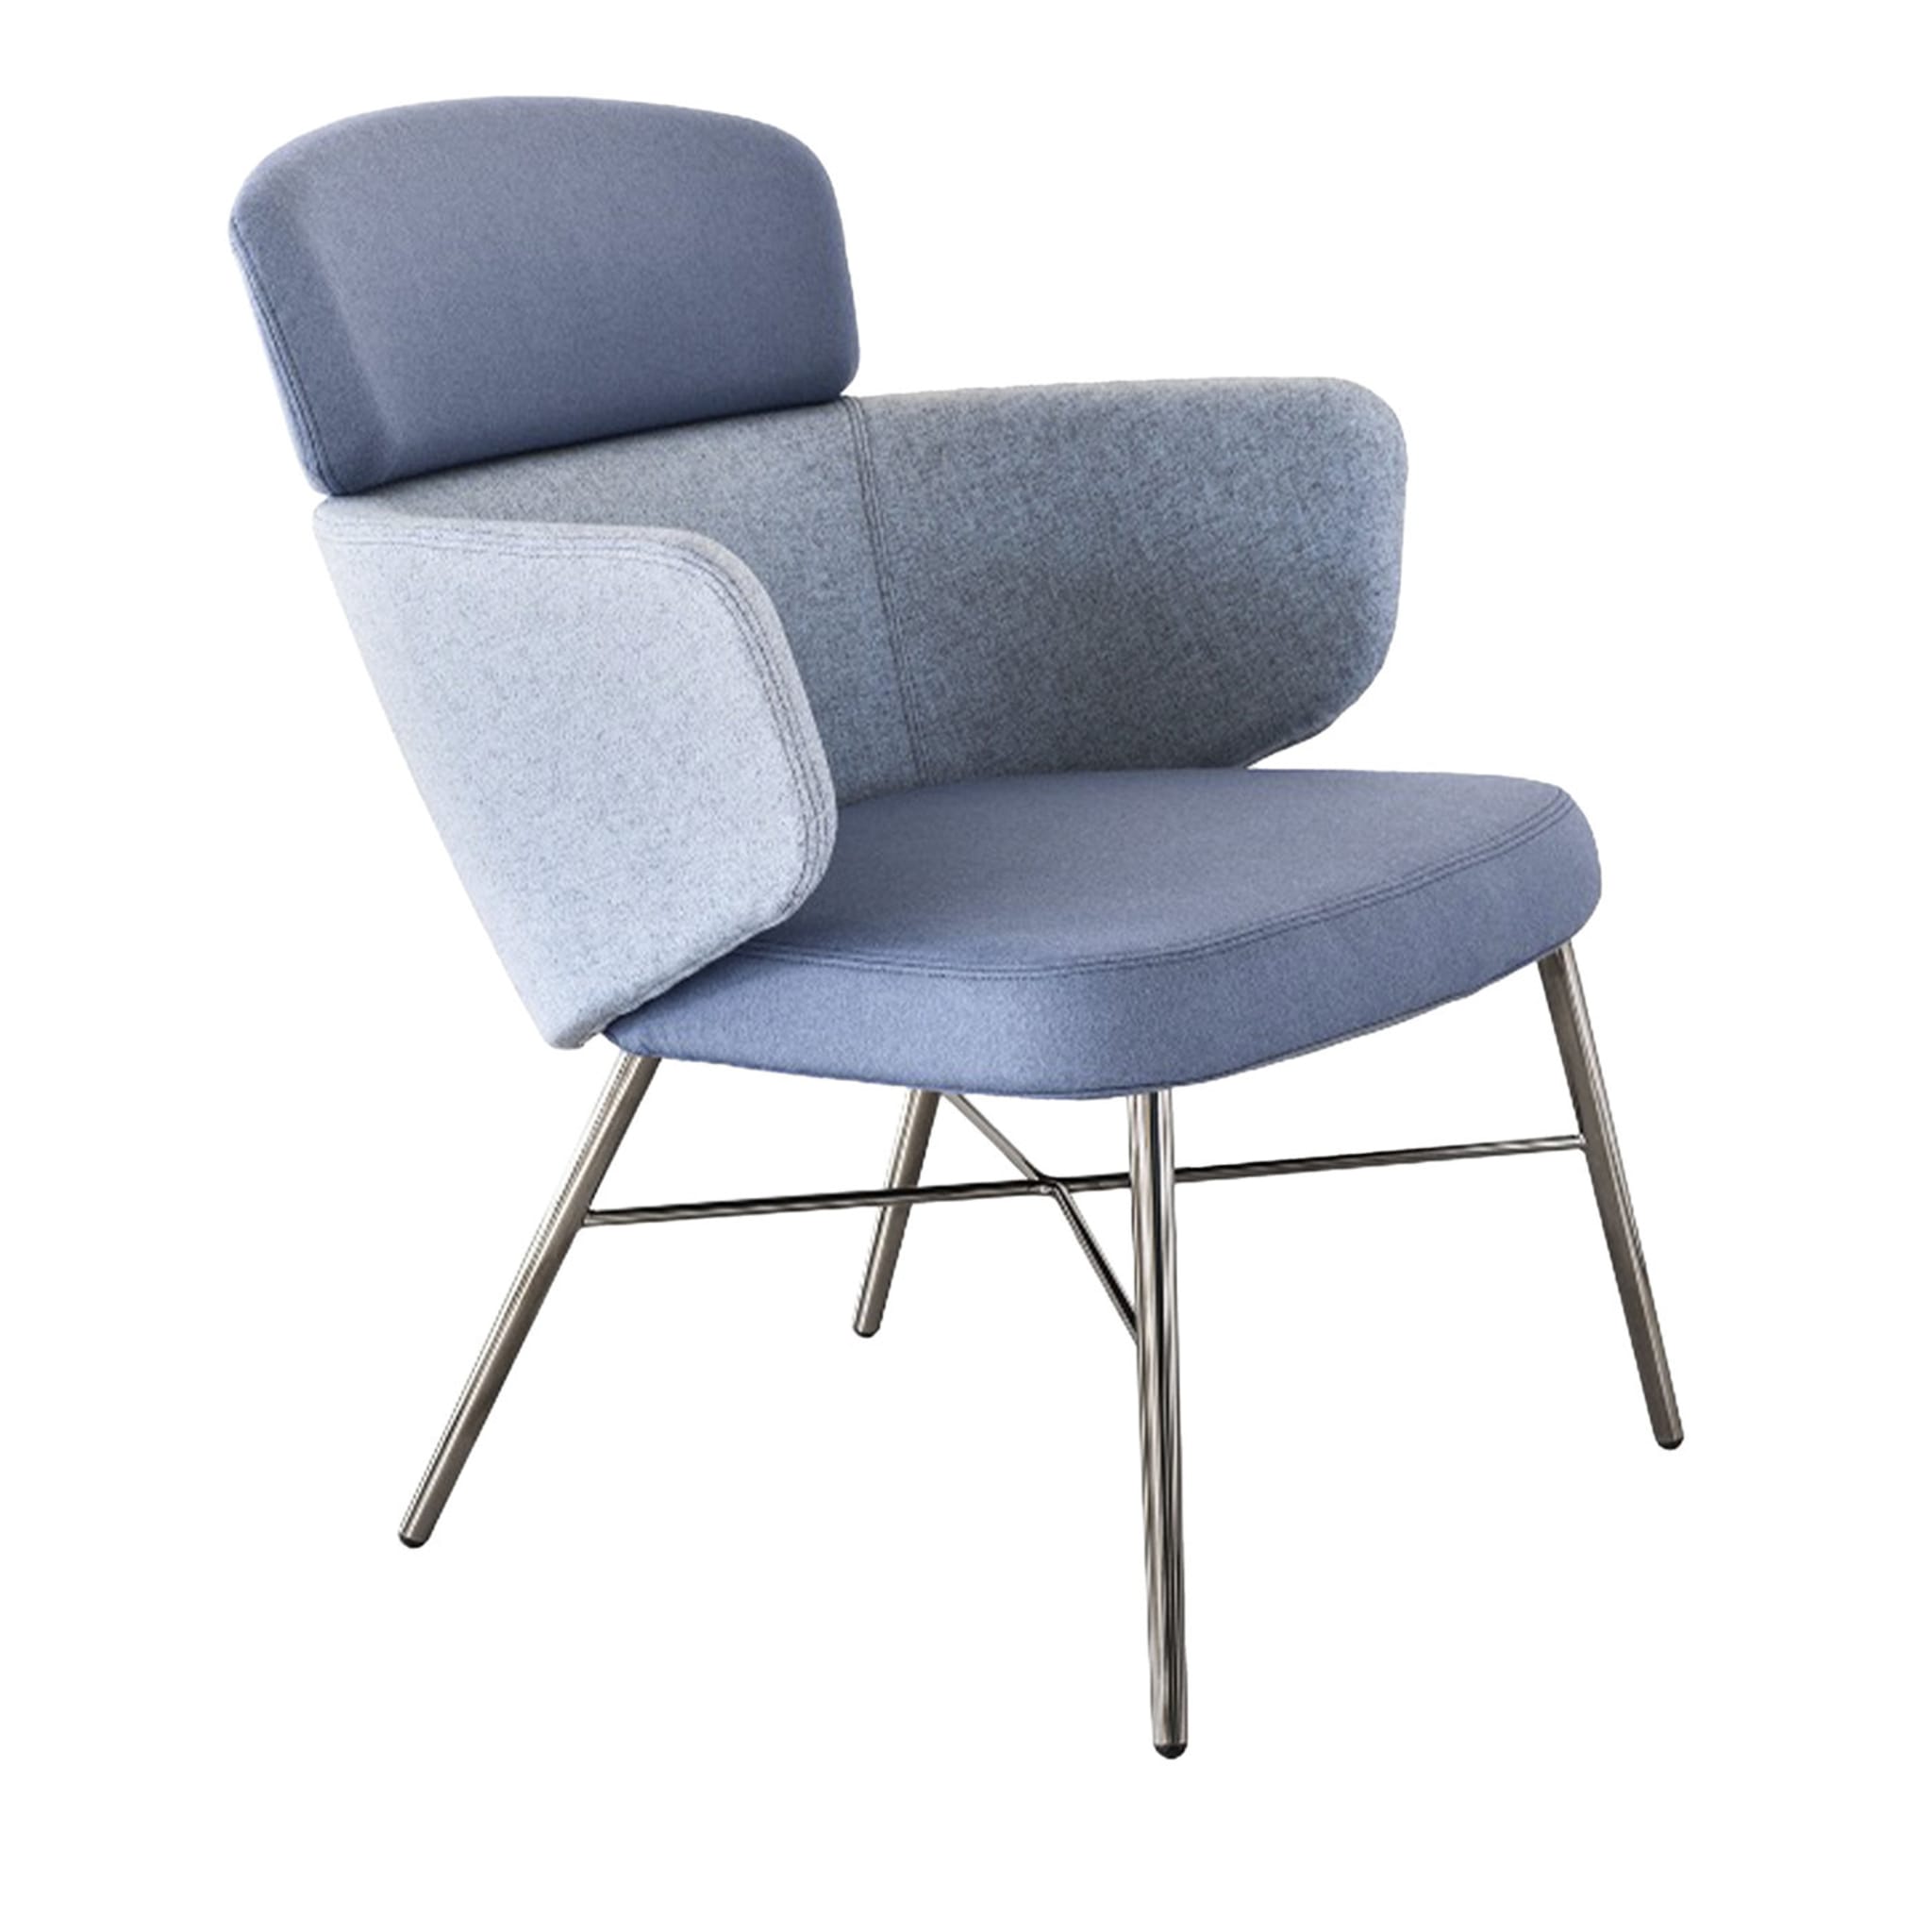 Kin Azure Lounge Chair by Radice Orlandini designstudio - Main view